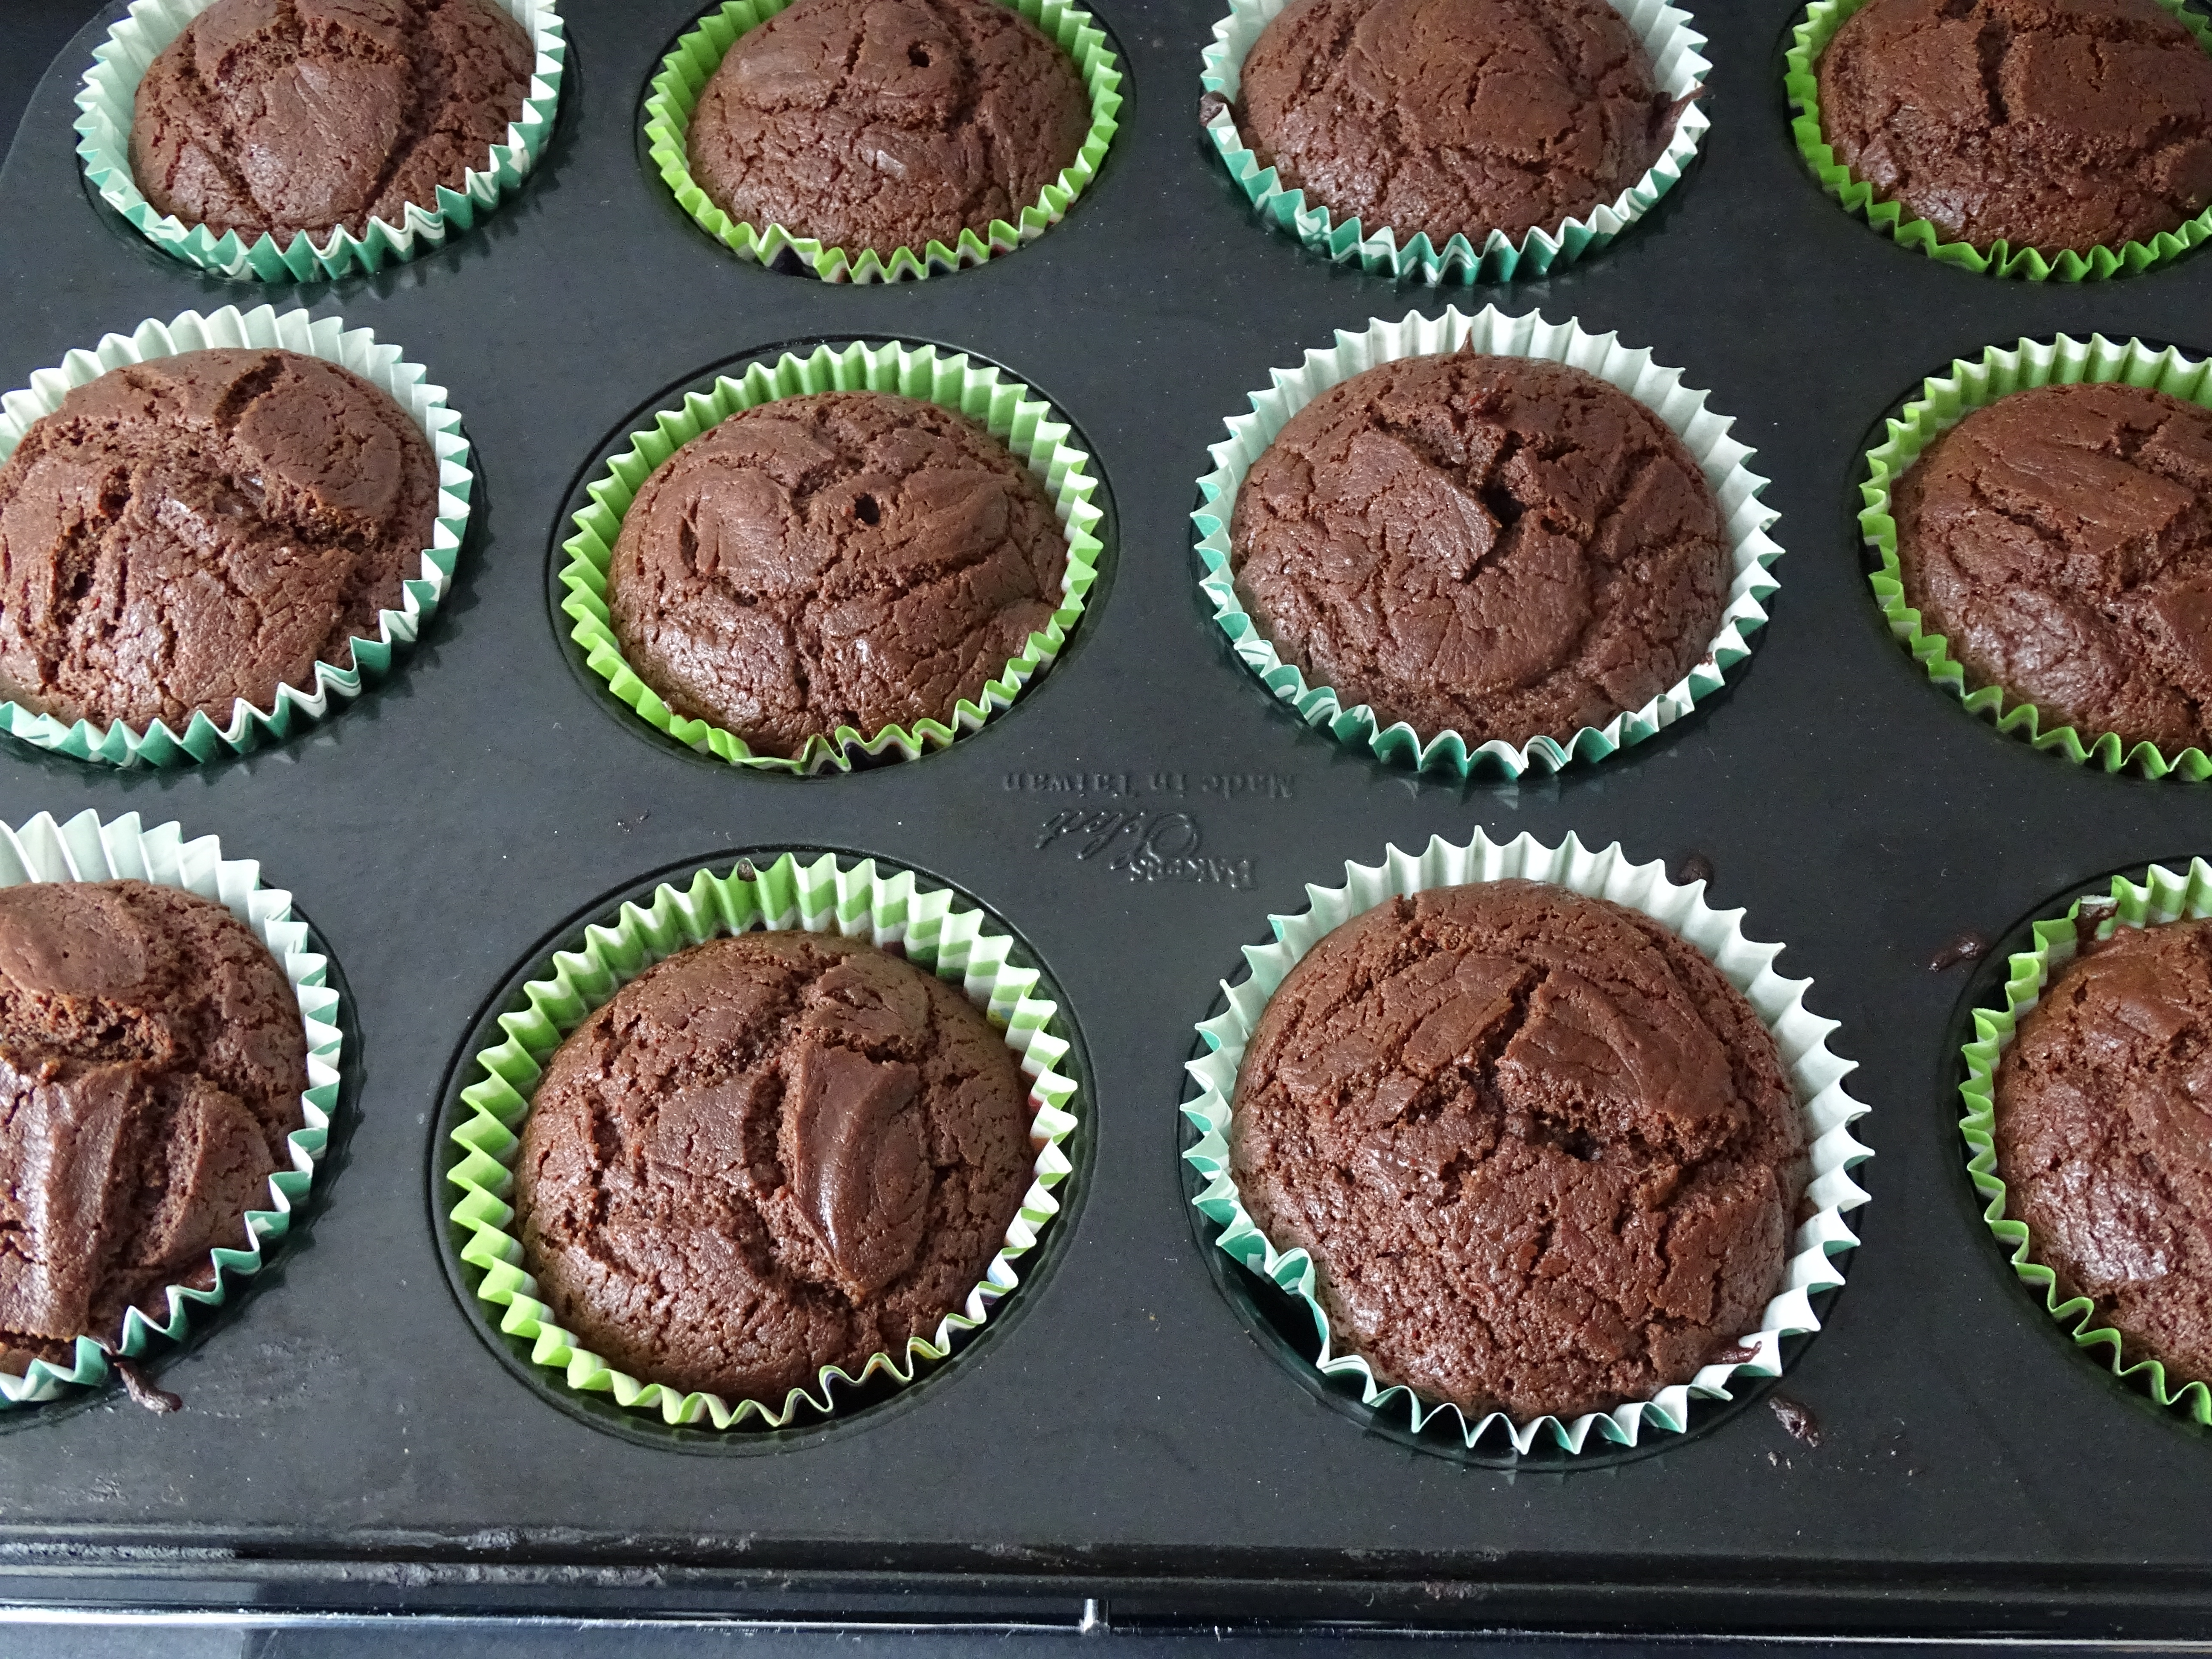 Baking tray of chocolate muffins